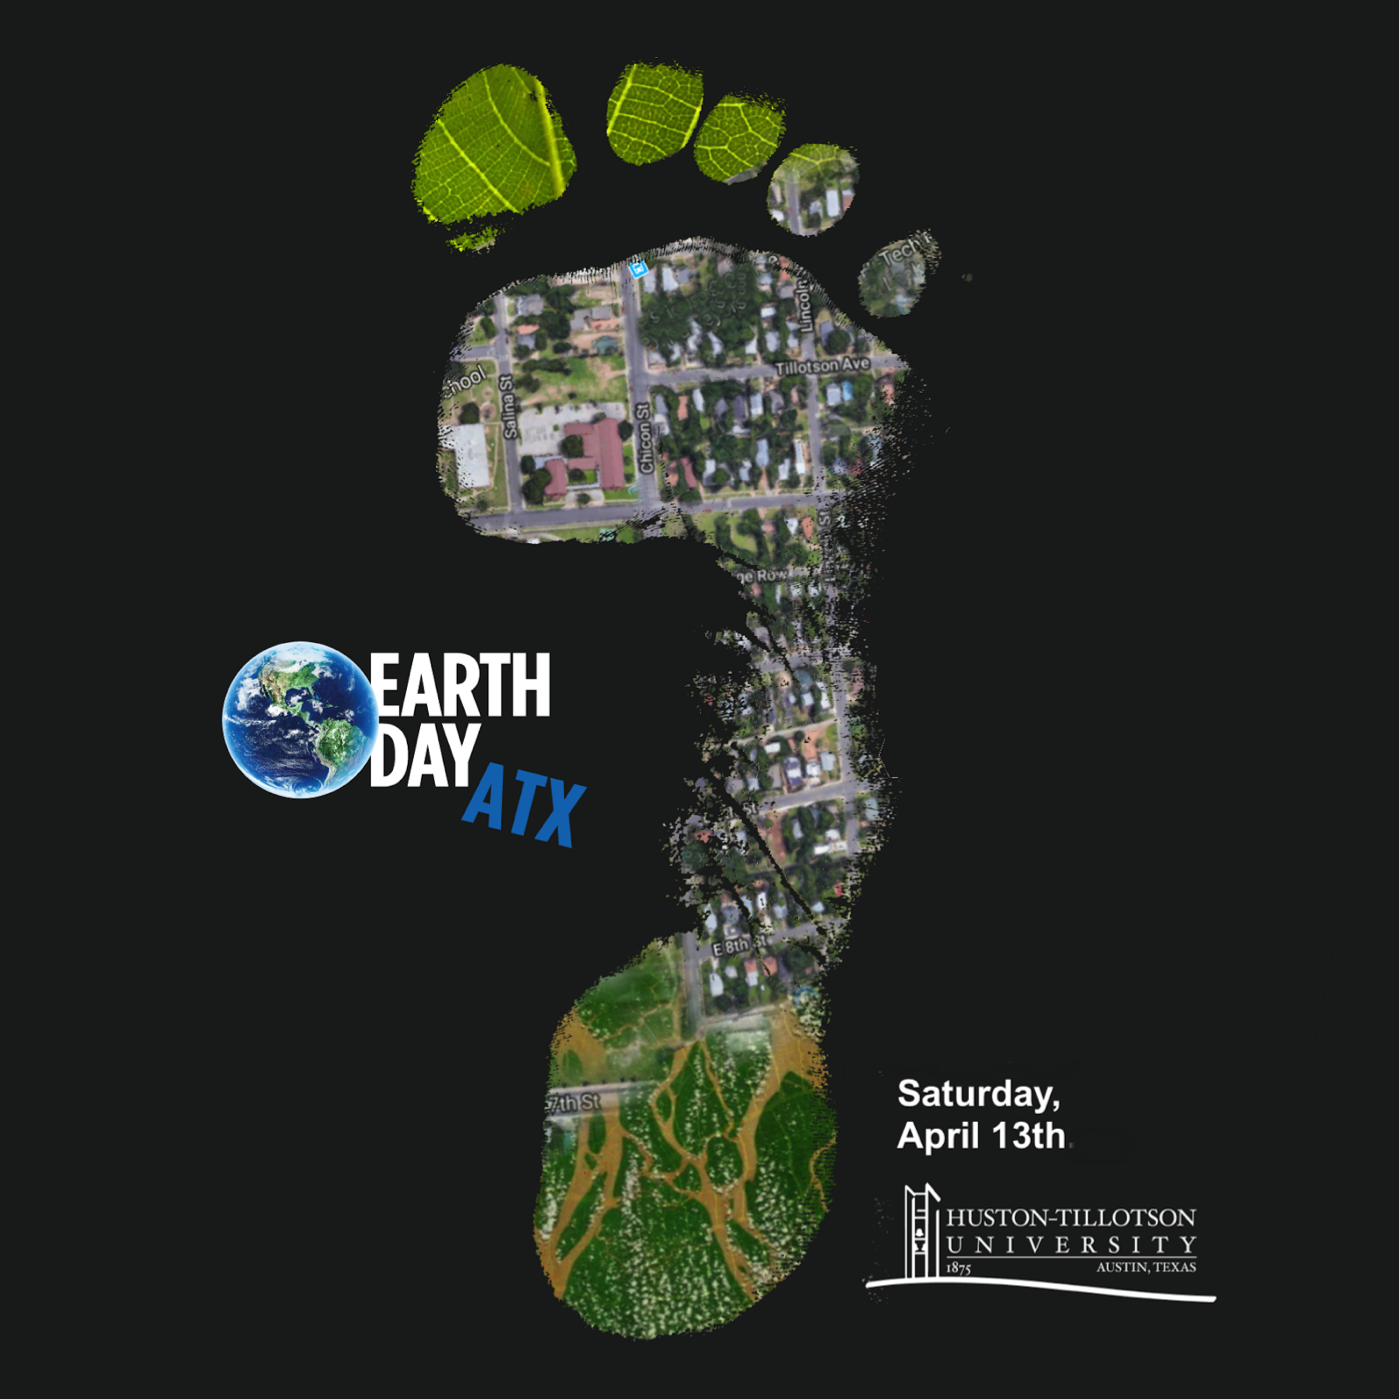 Earth Day ATX 2019